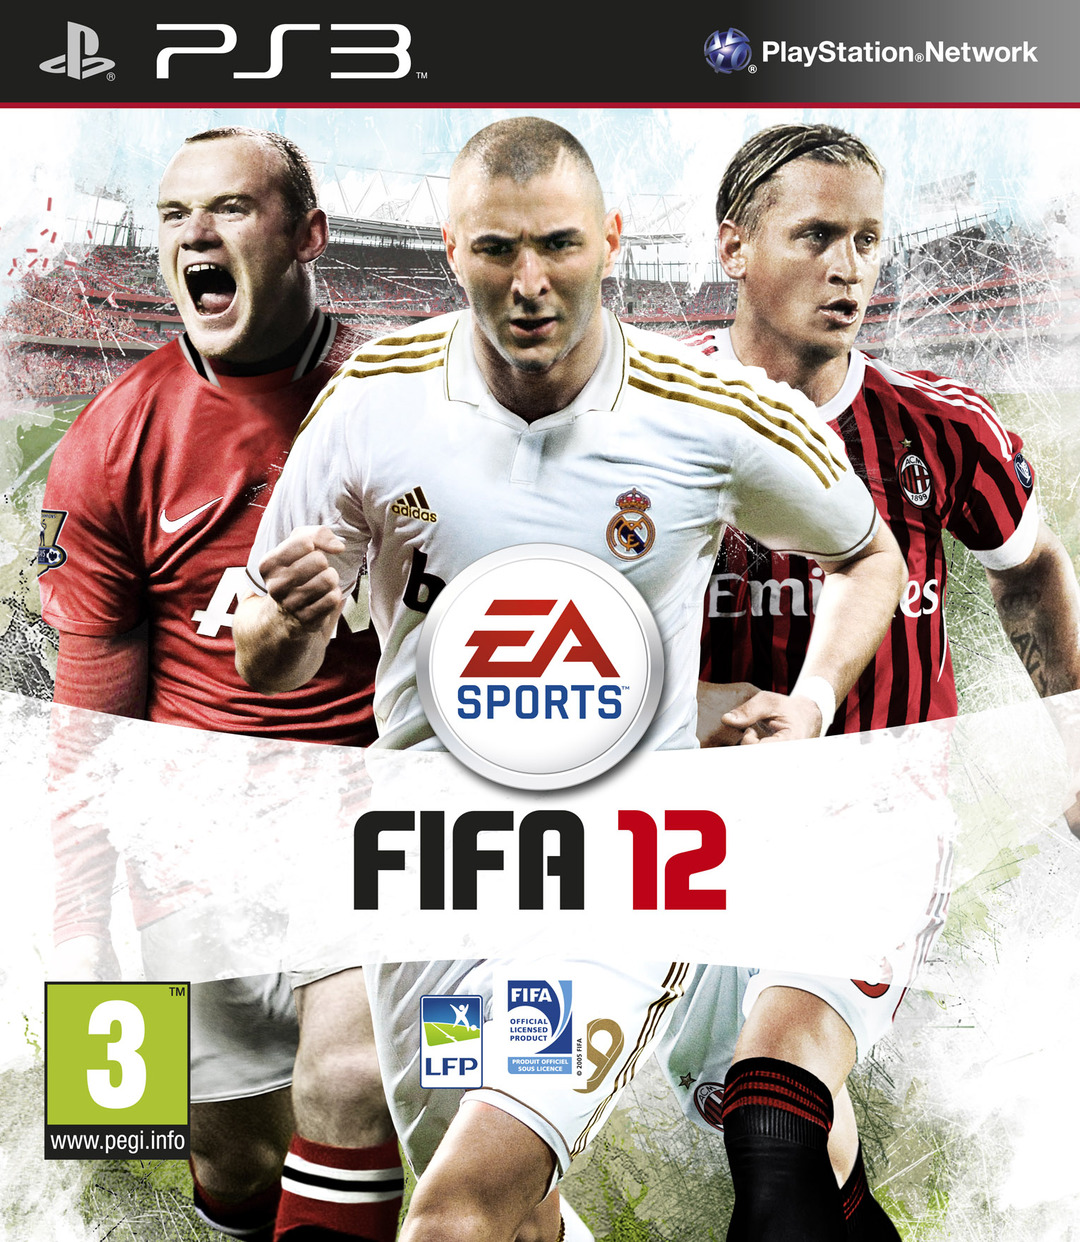 jaquette du jeu vidéo FIFA 12